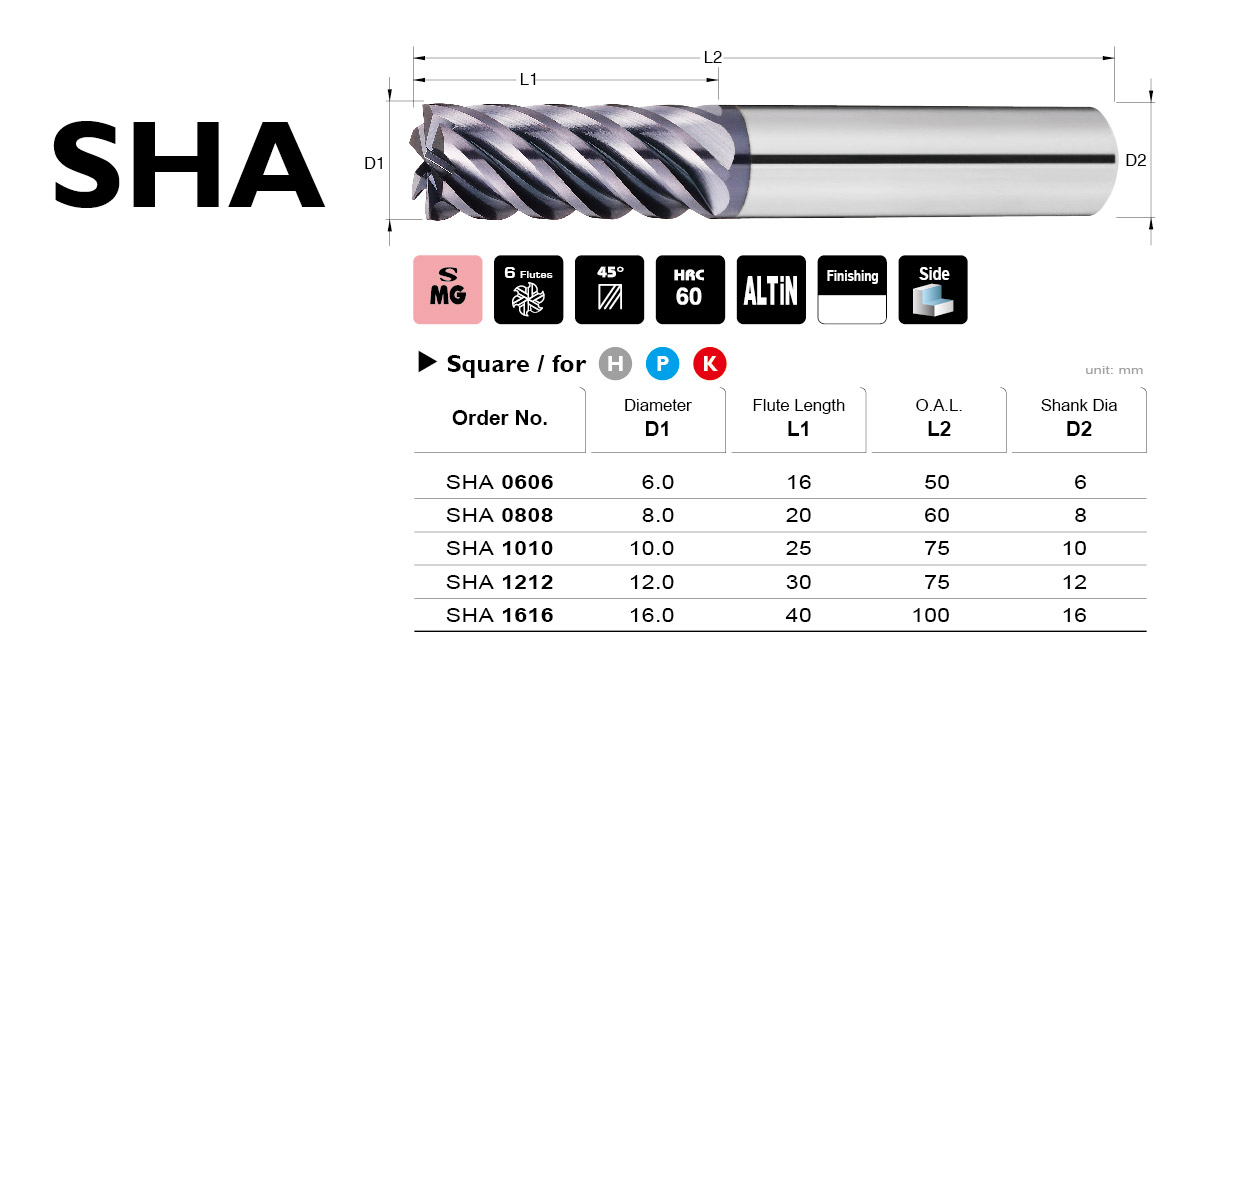 Catalog|SHA series